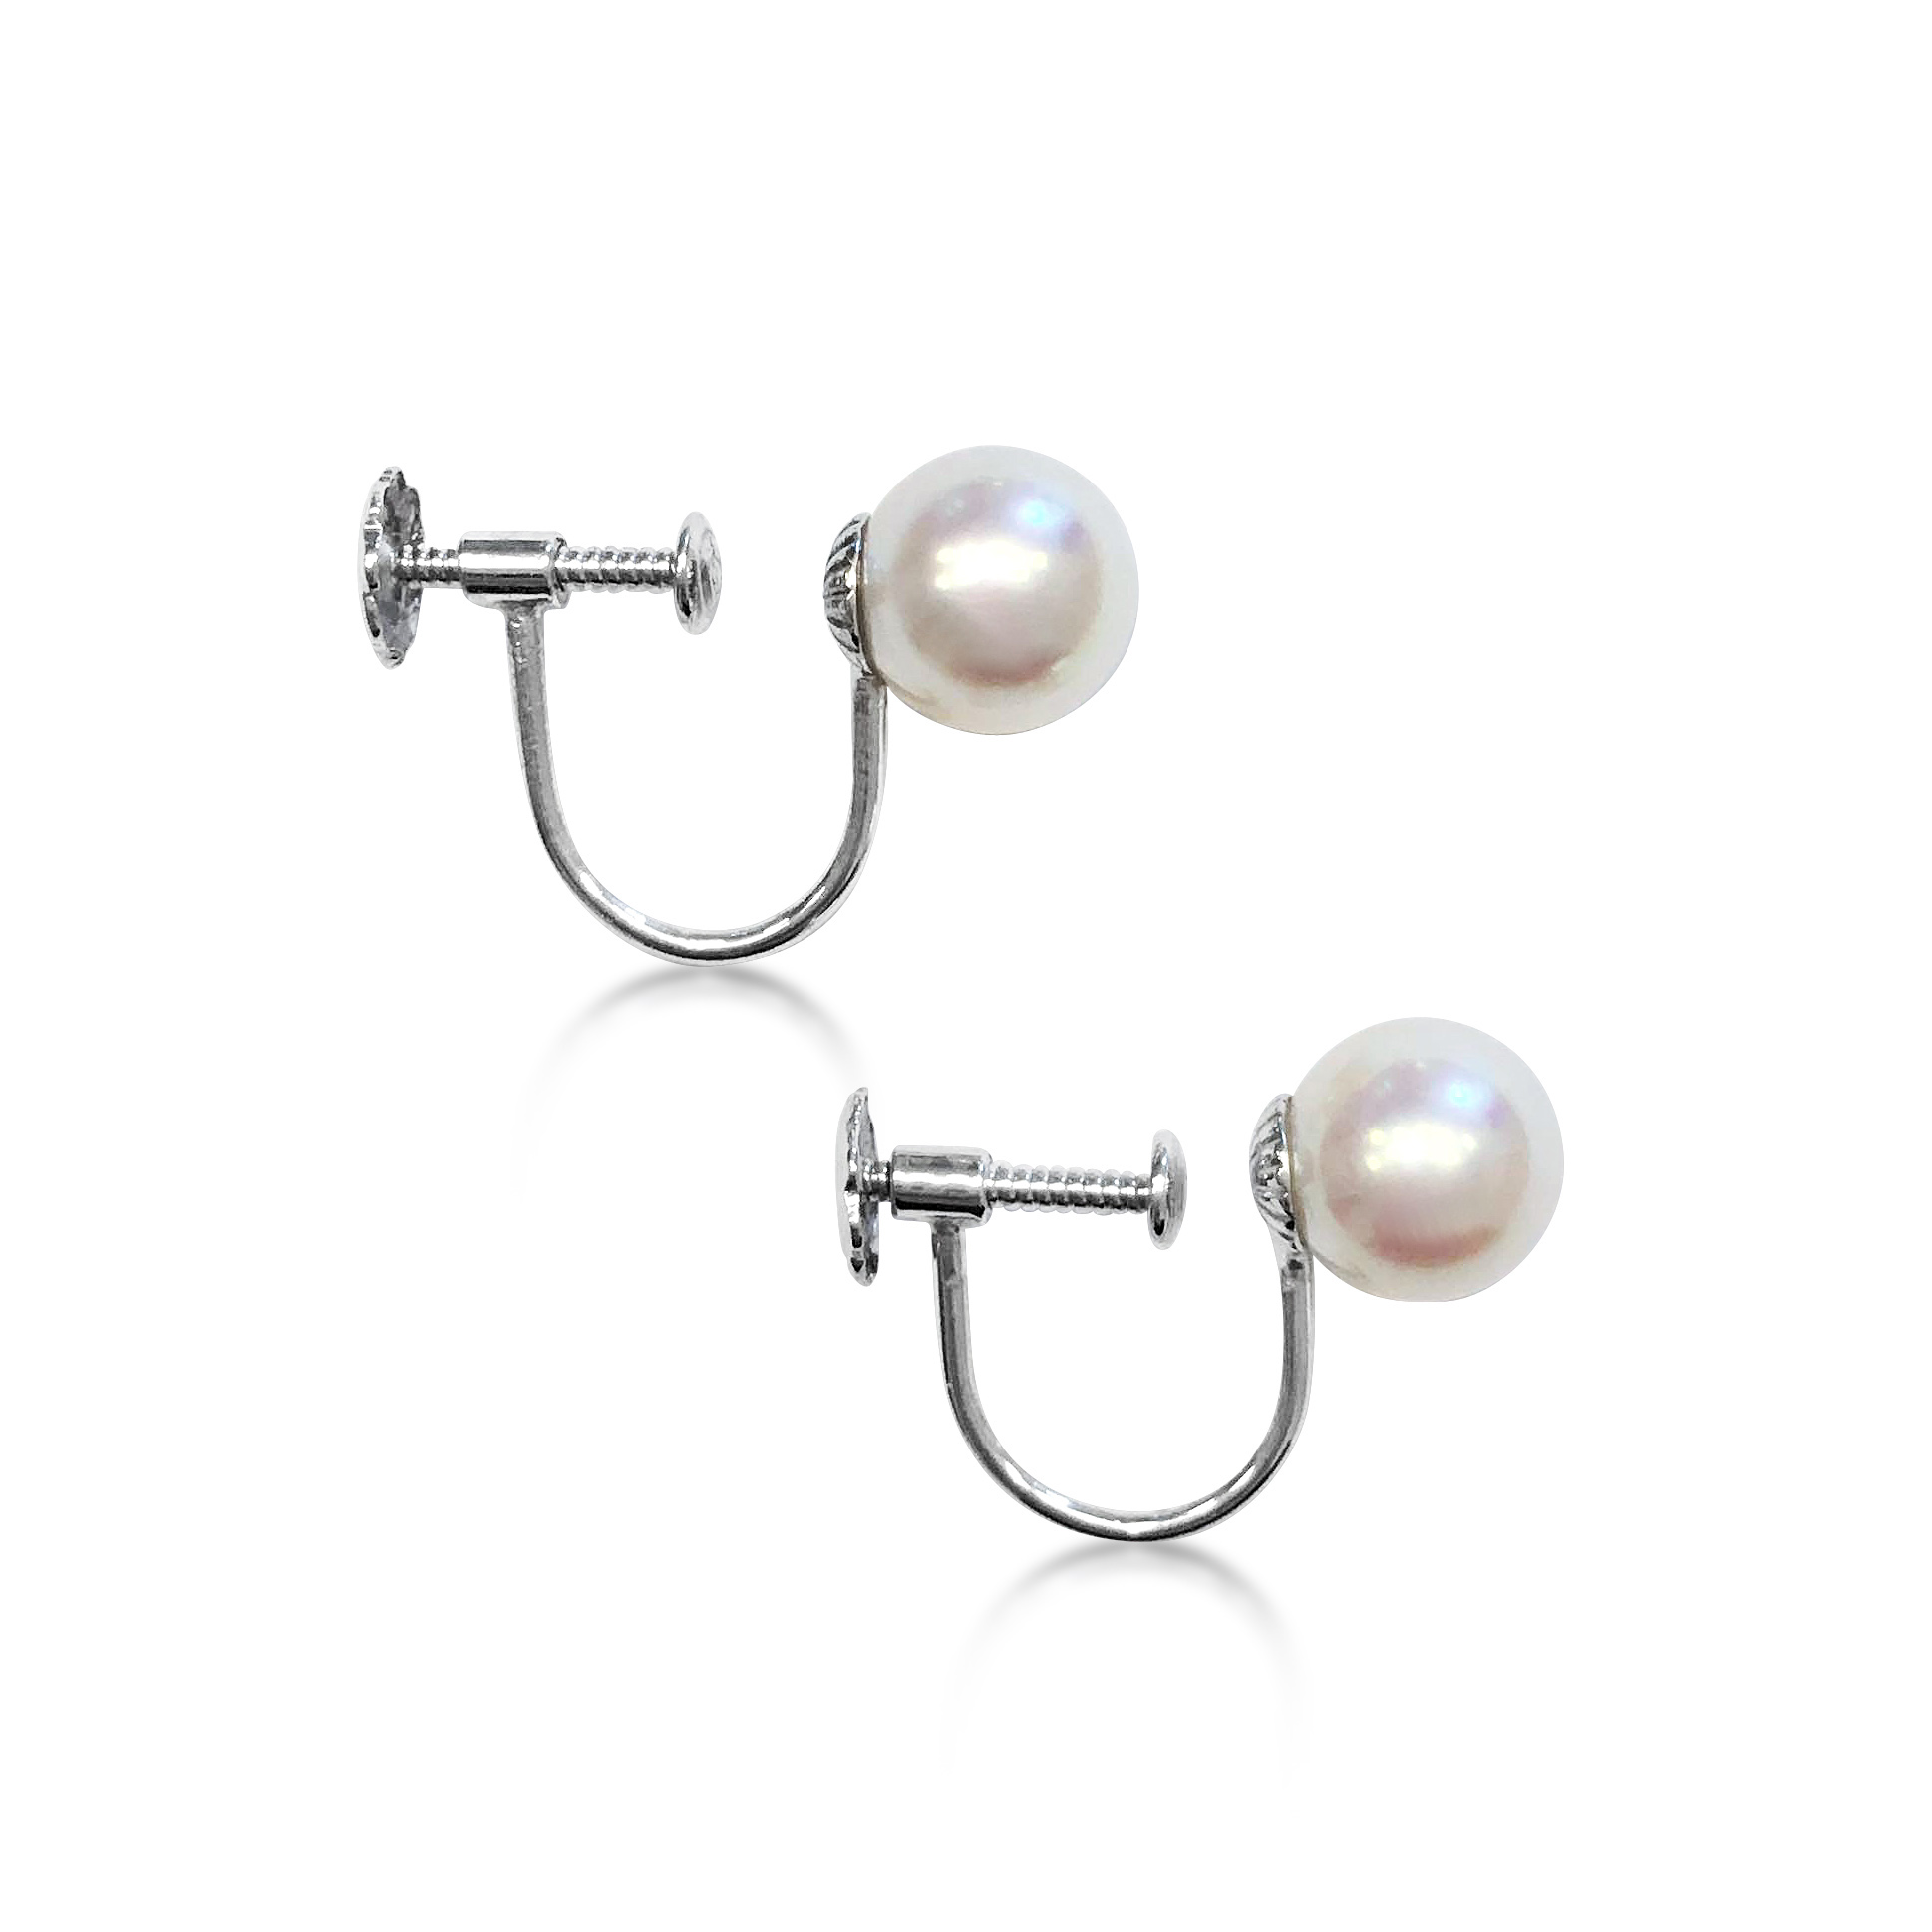 bespoke-cultured-pearl-stud-earrings-with-18ct-white-gold-screw-back-fittings-2.jpg